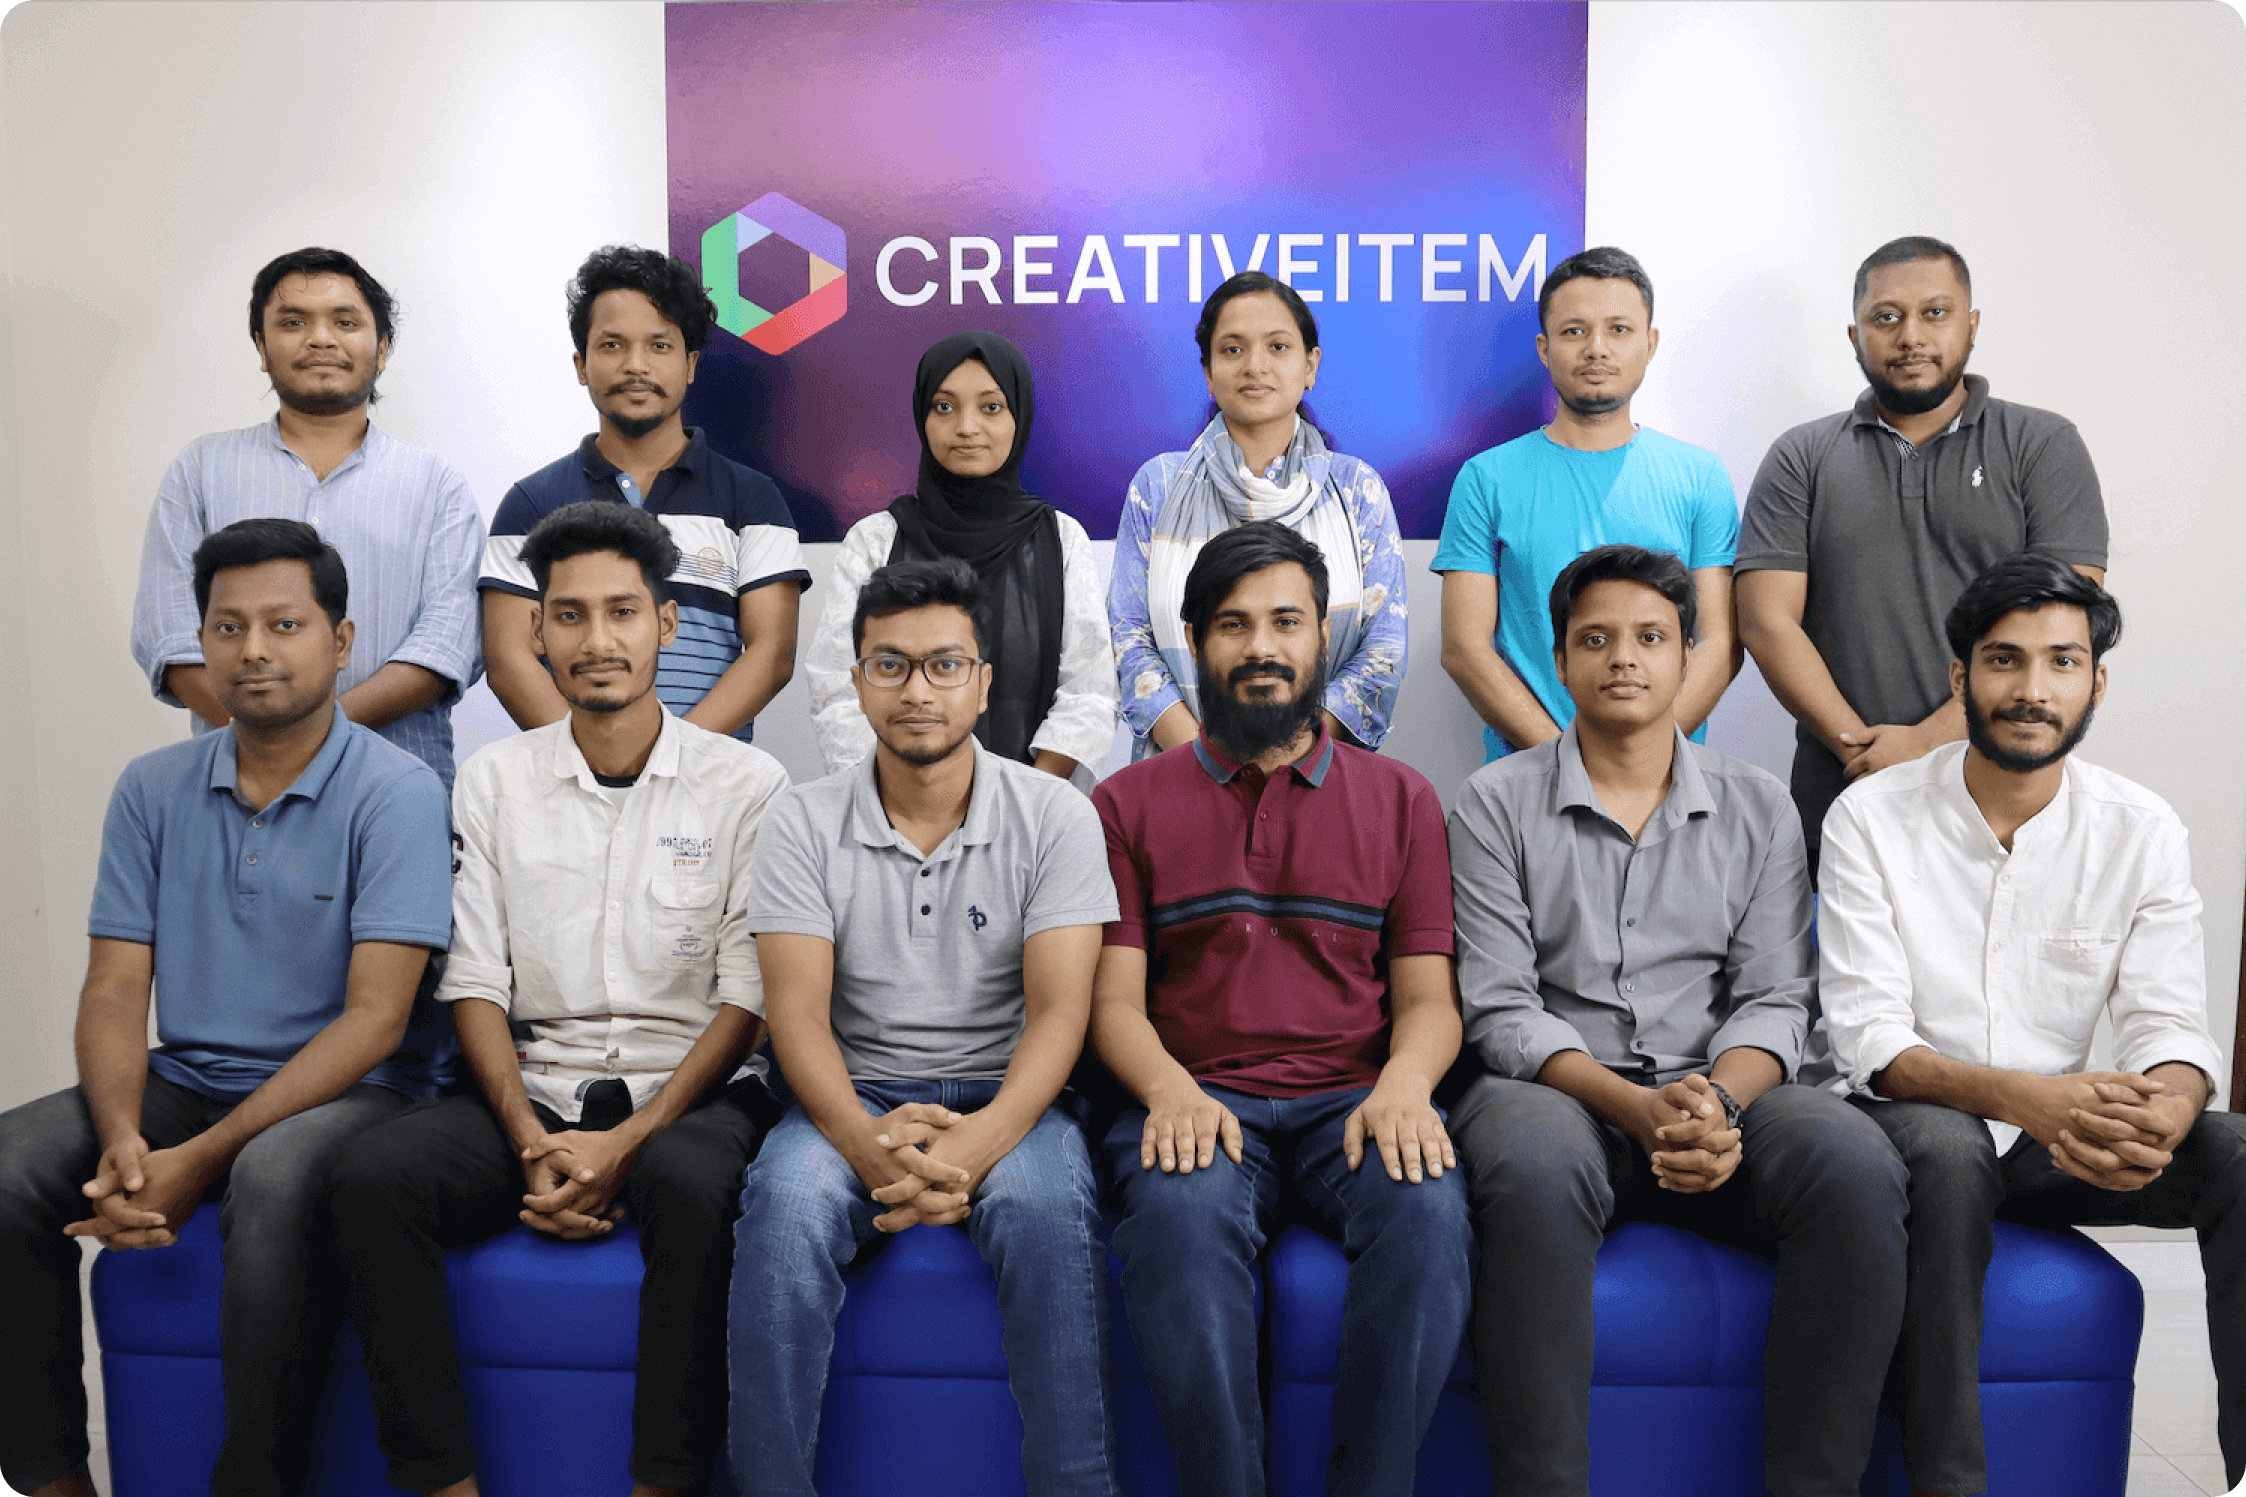 Group photo of the Creativeitem team, against the Creativeitem logo